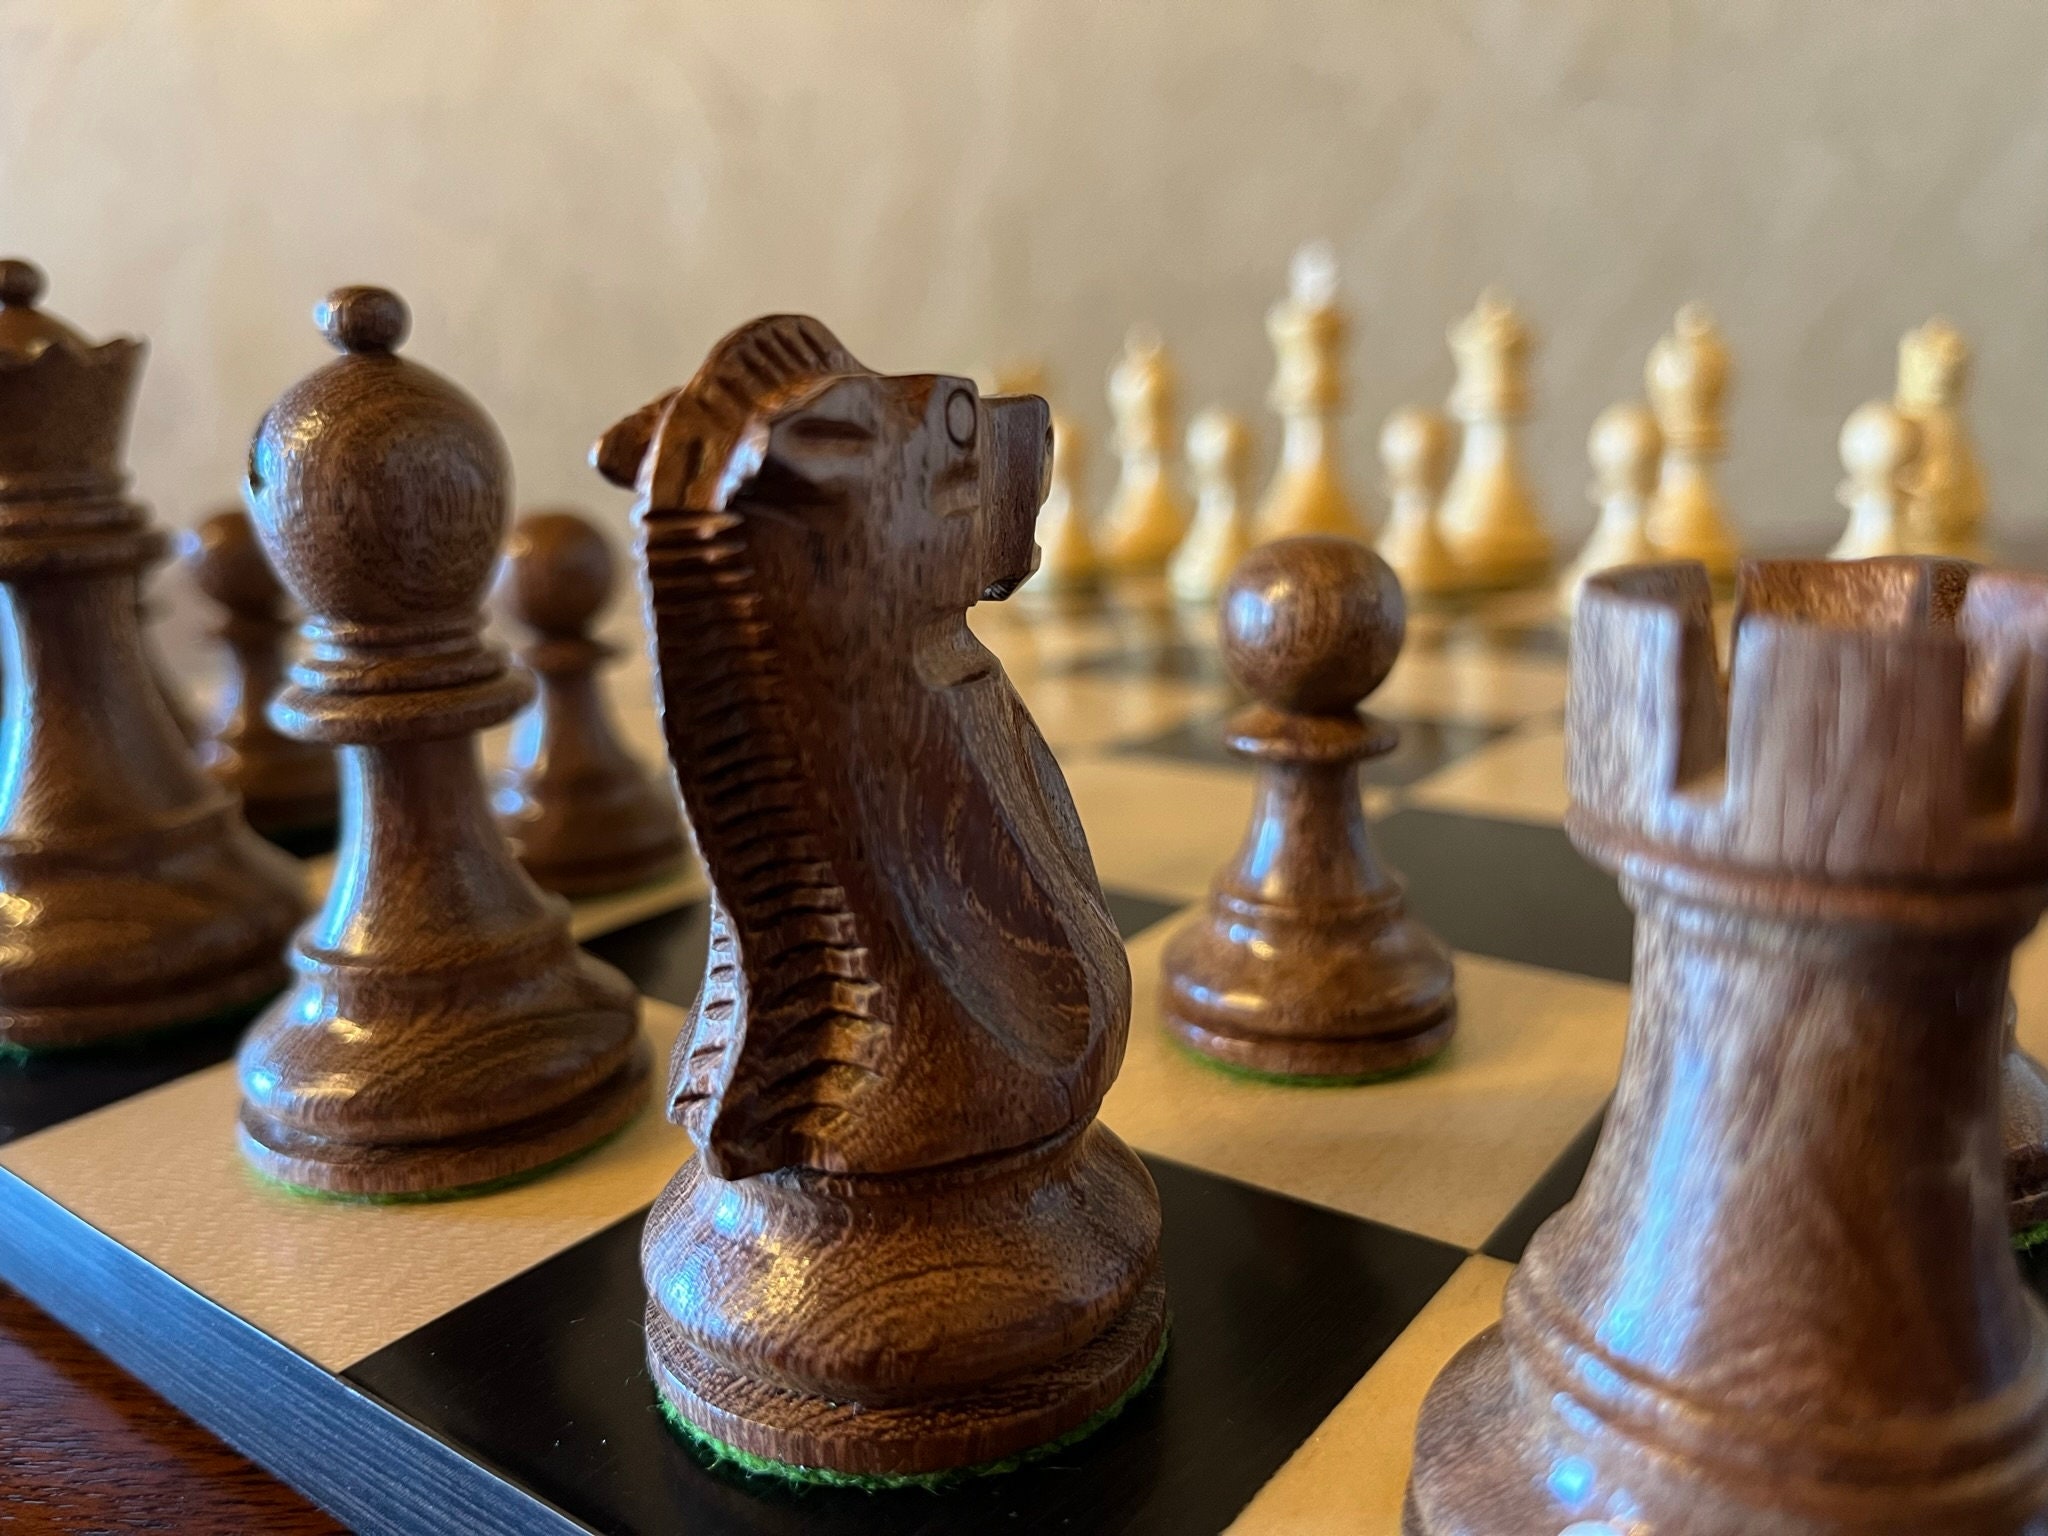 Bobby Fischer v Boris Spassky: Chess 'Match of the Century' leaves